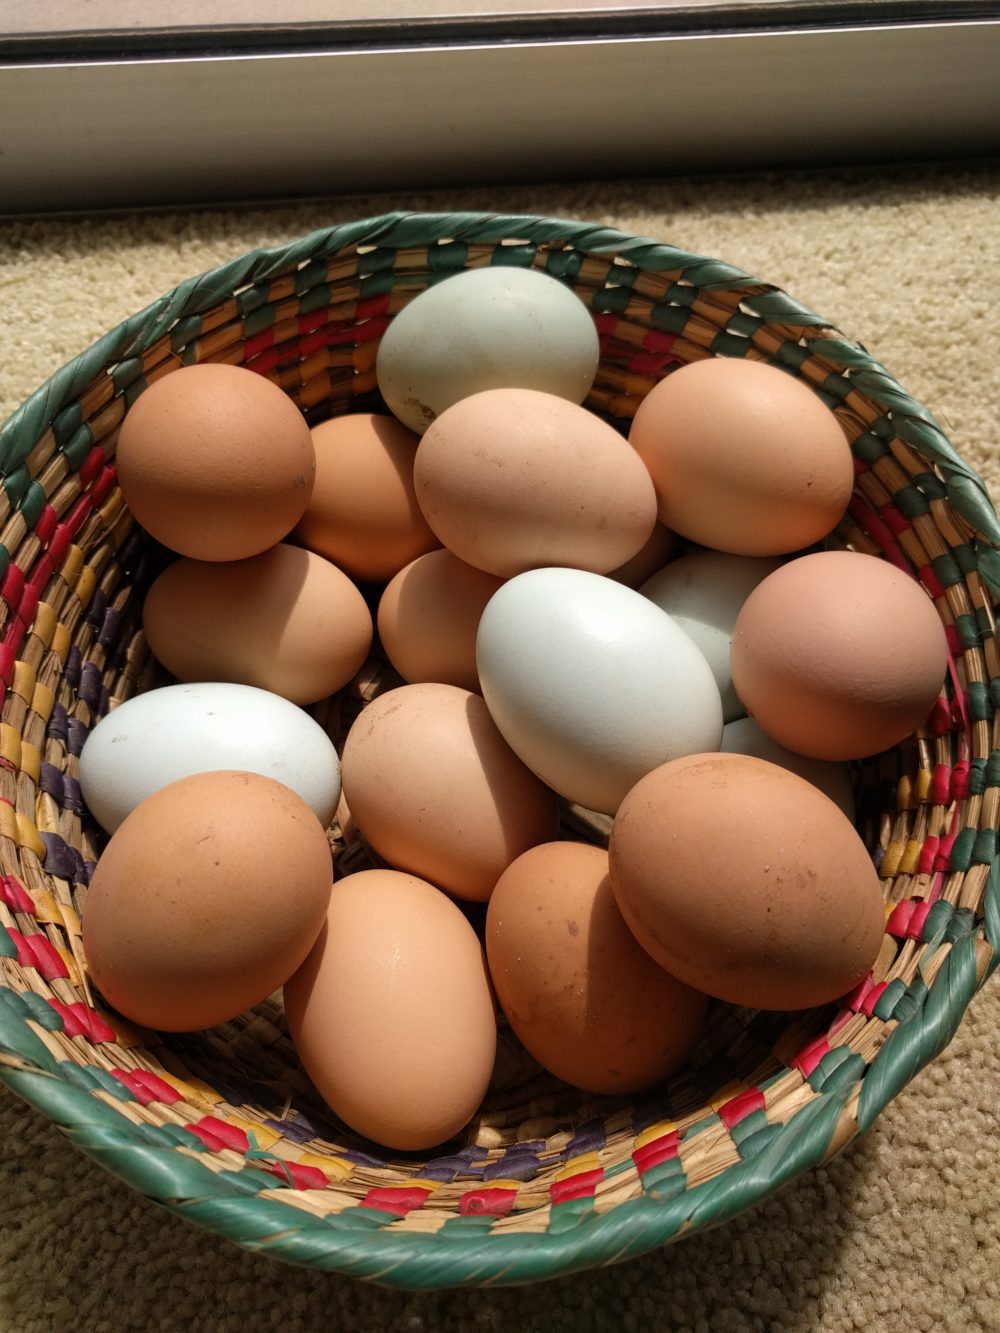 backyard chicken eggs - Greg Alder's Yard Posts: Food ...